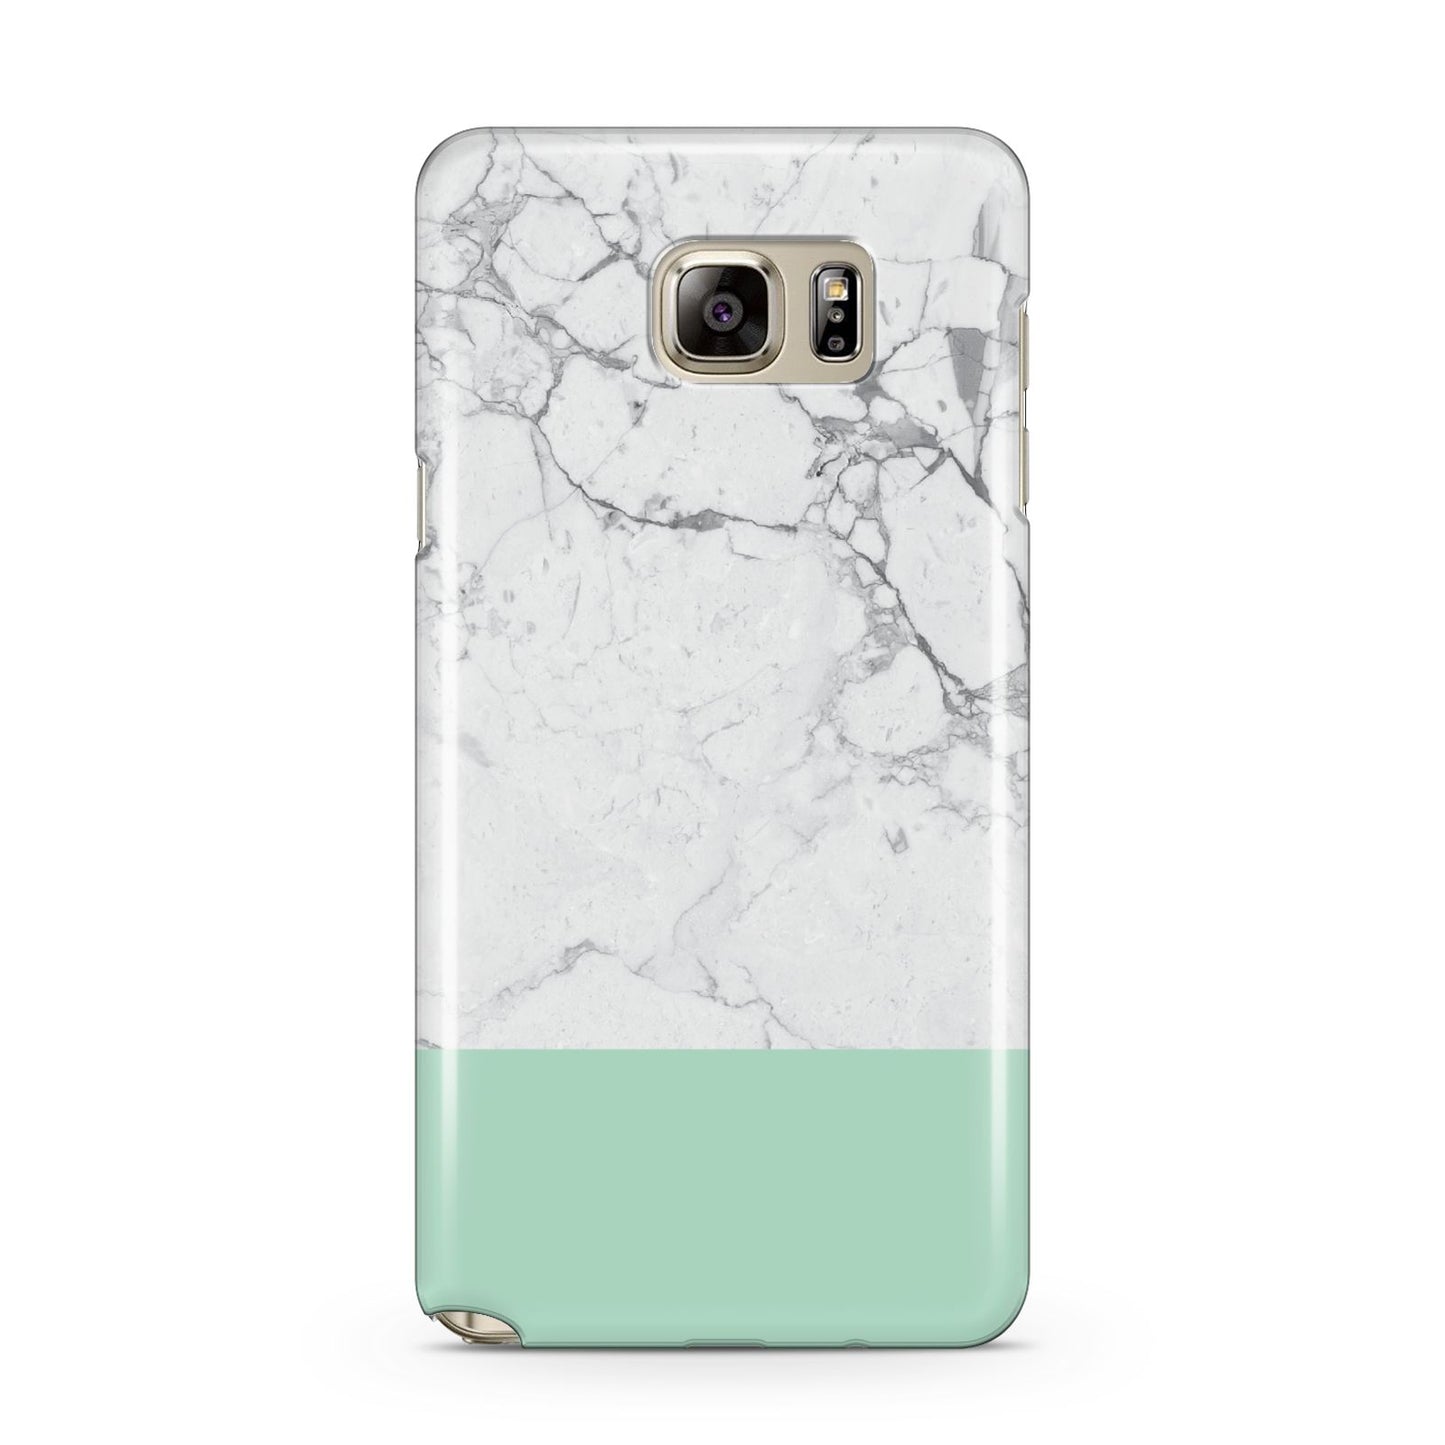 Marble White Carrara Green Samsung Galaxy Note 5 Case